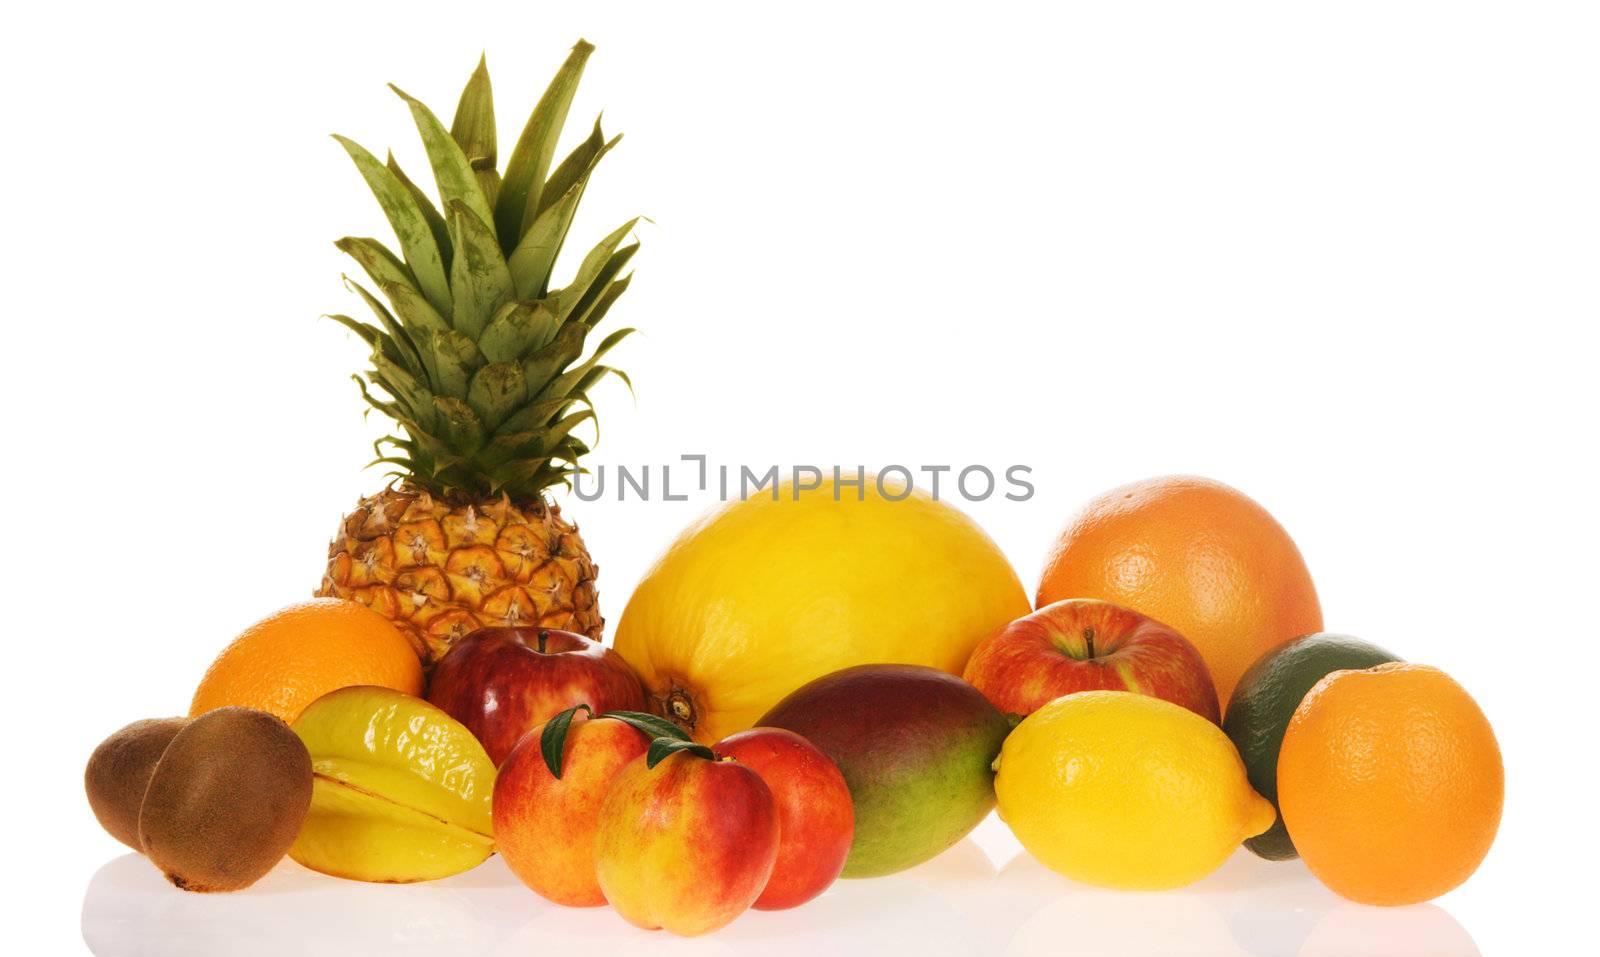 Assortment of fresh fruits by Gdolgikh